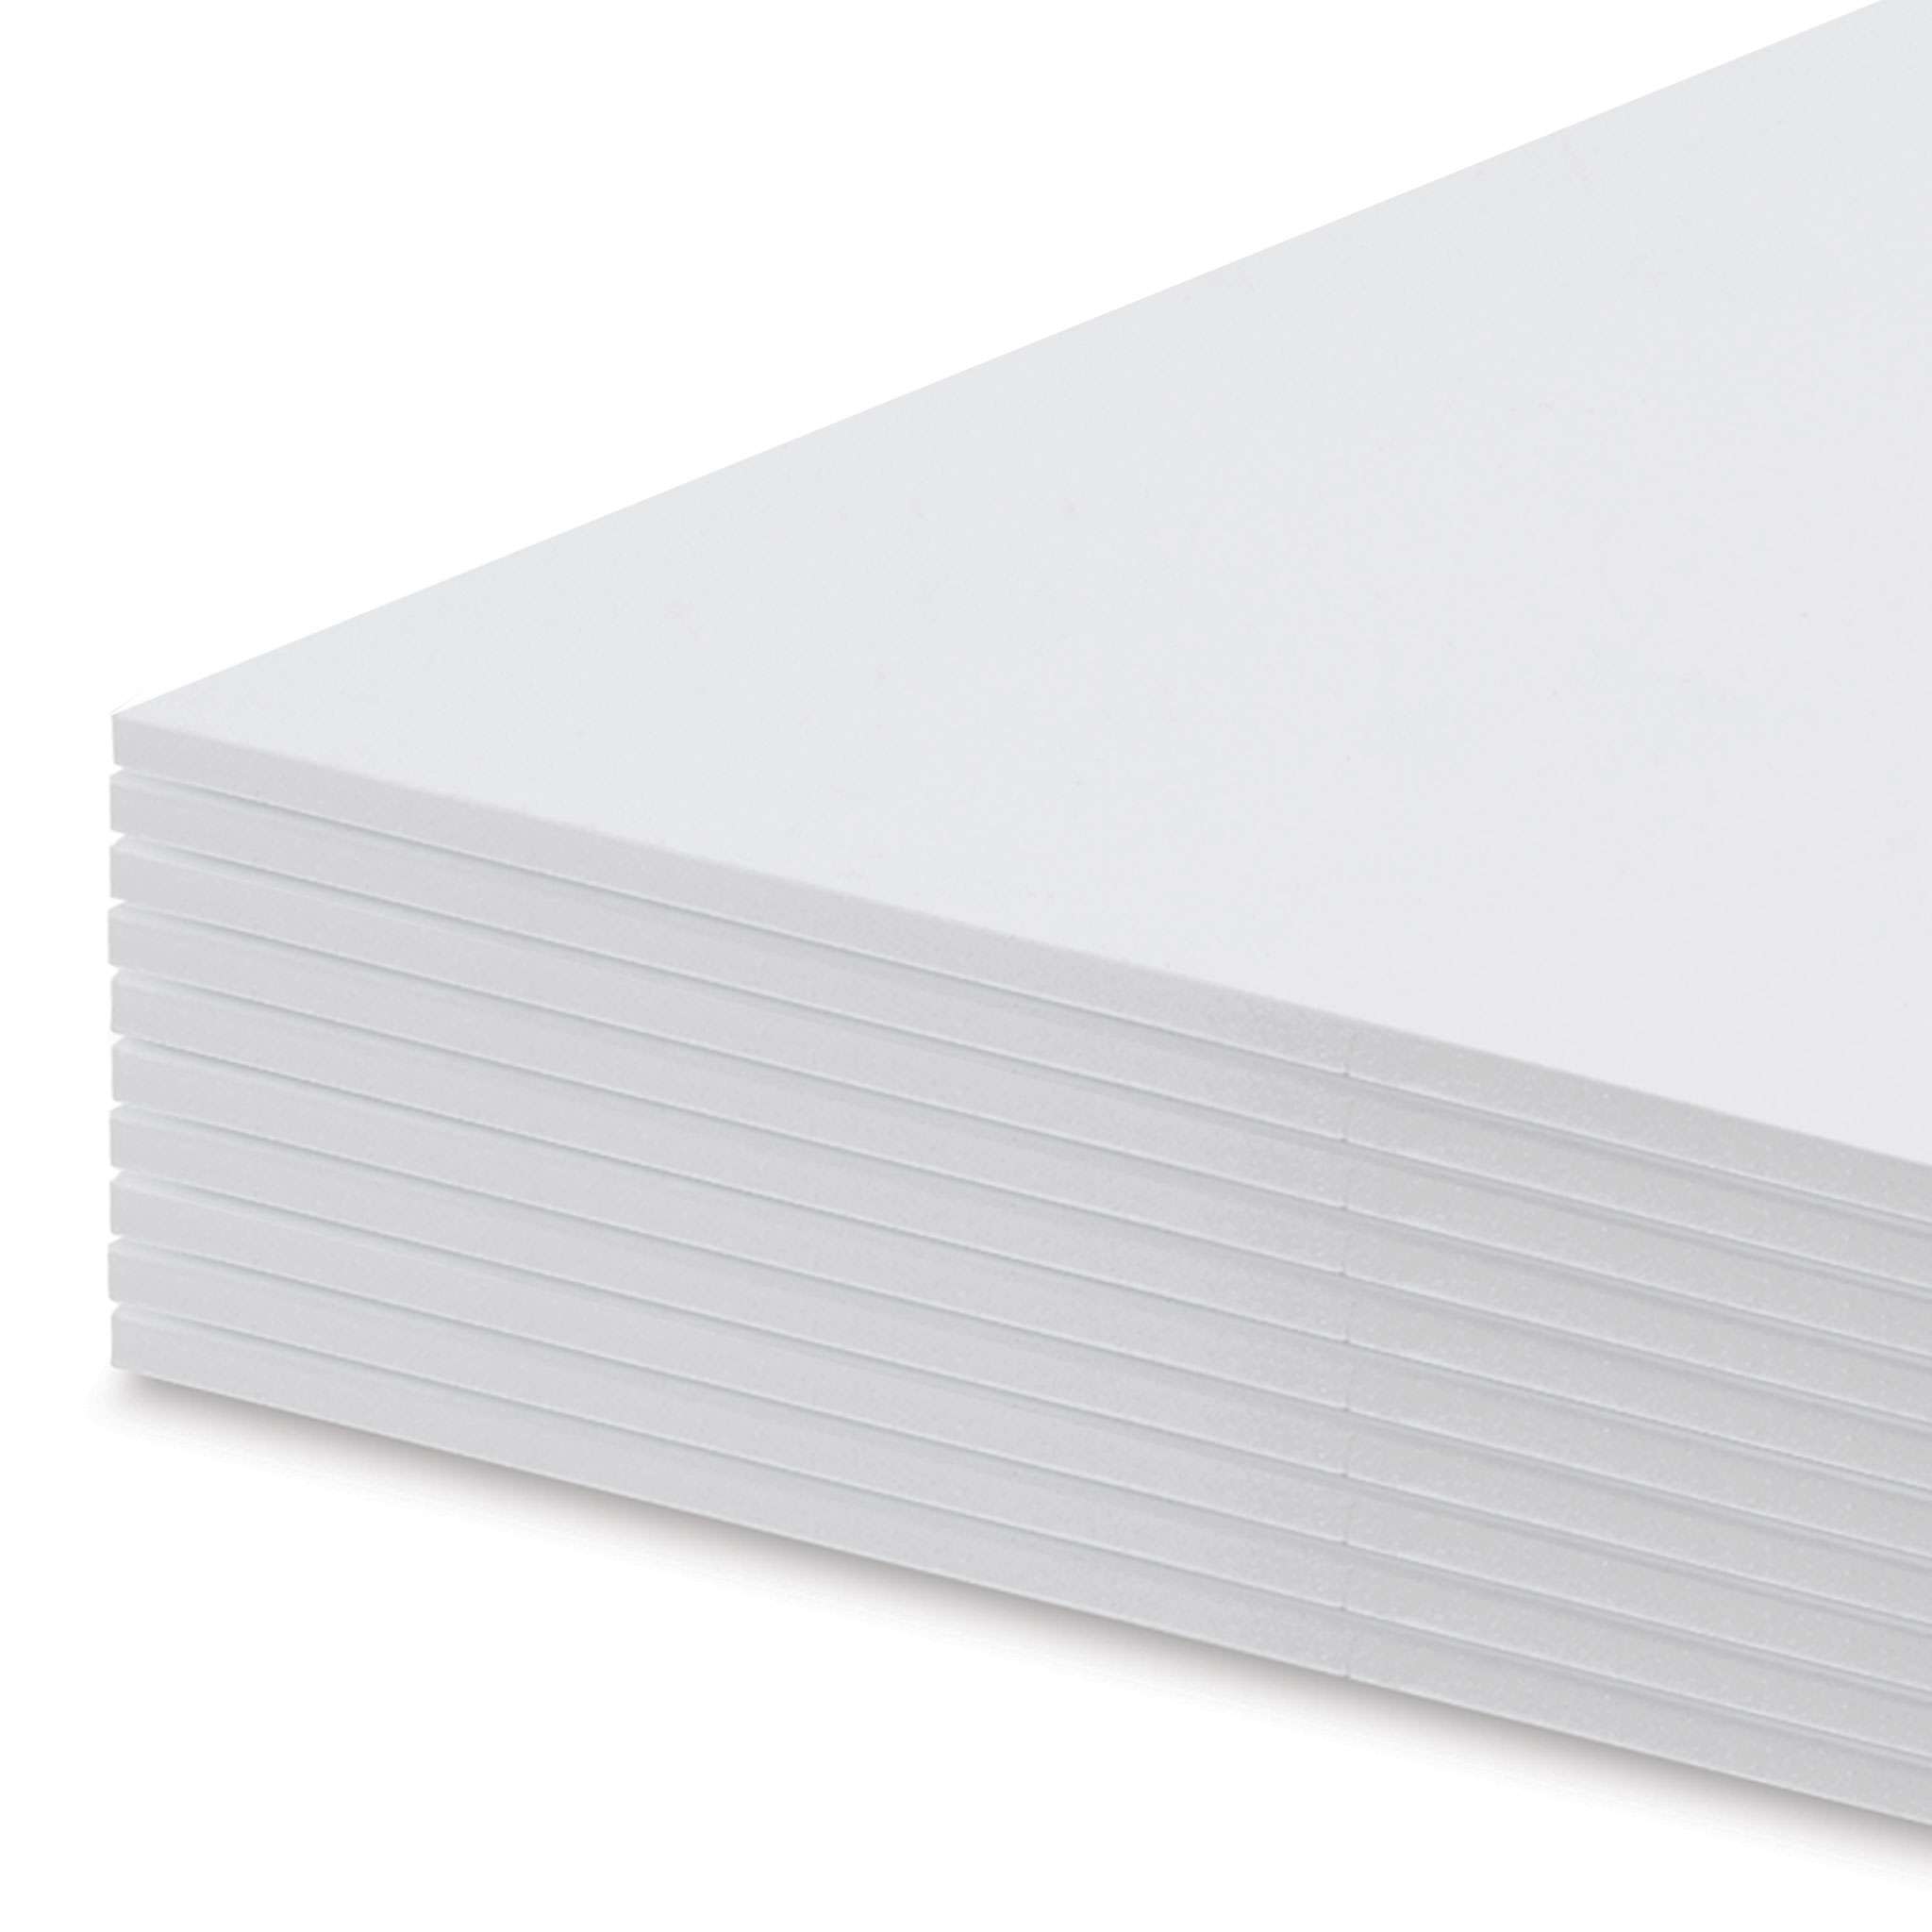 White Foam Board - 30 inch x 40 inch x 3/16 inch, Pkg of 10